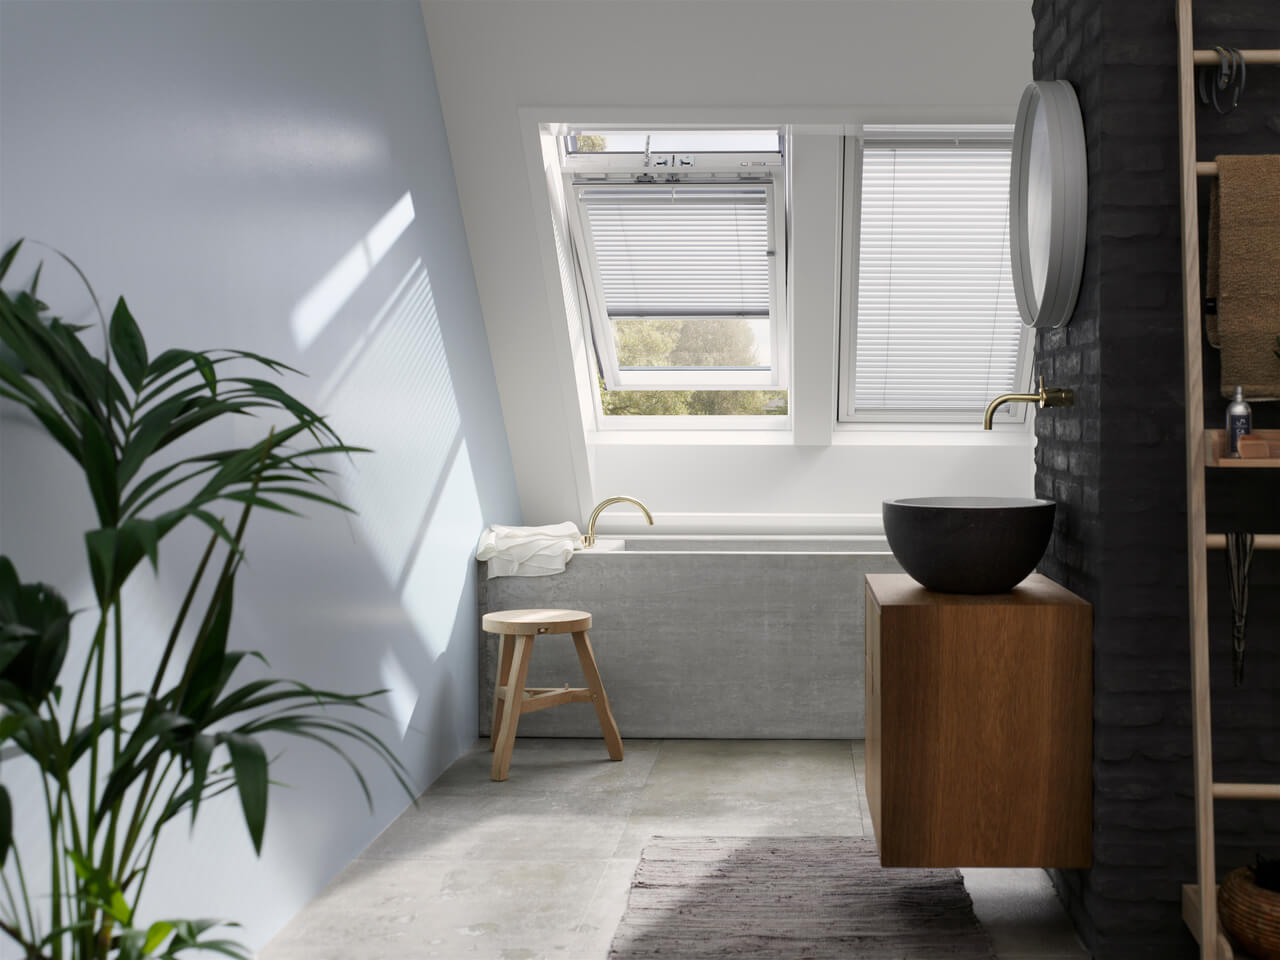 Modern bathroom with VELUX roof window, round mirror, and wooden vanity.